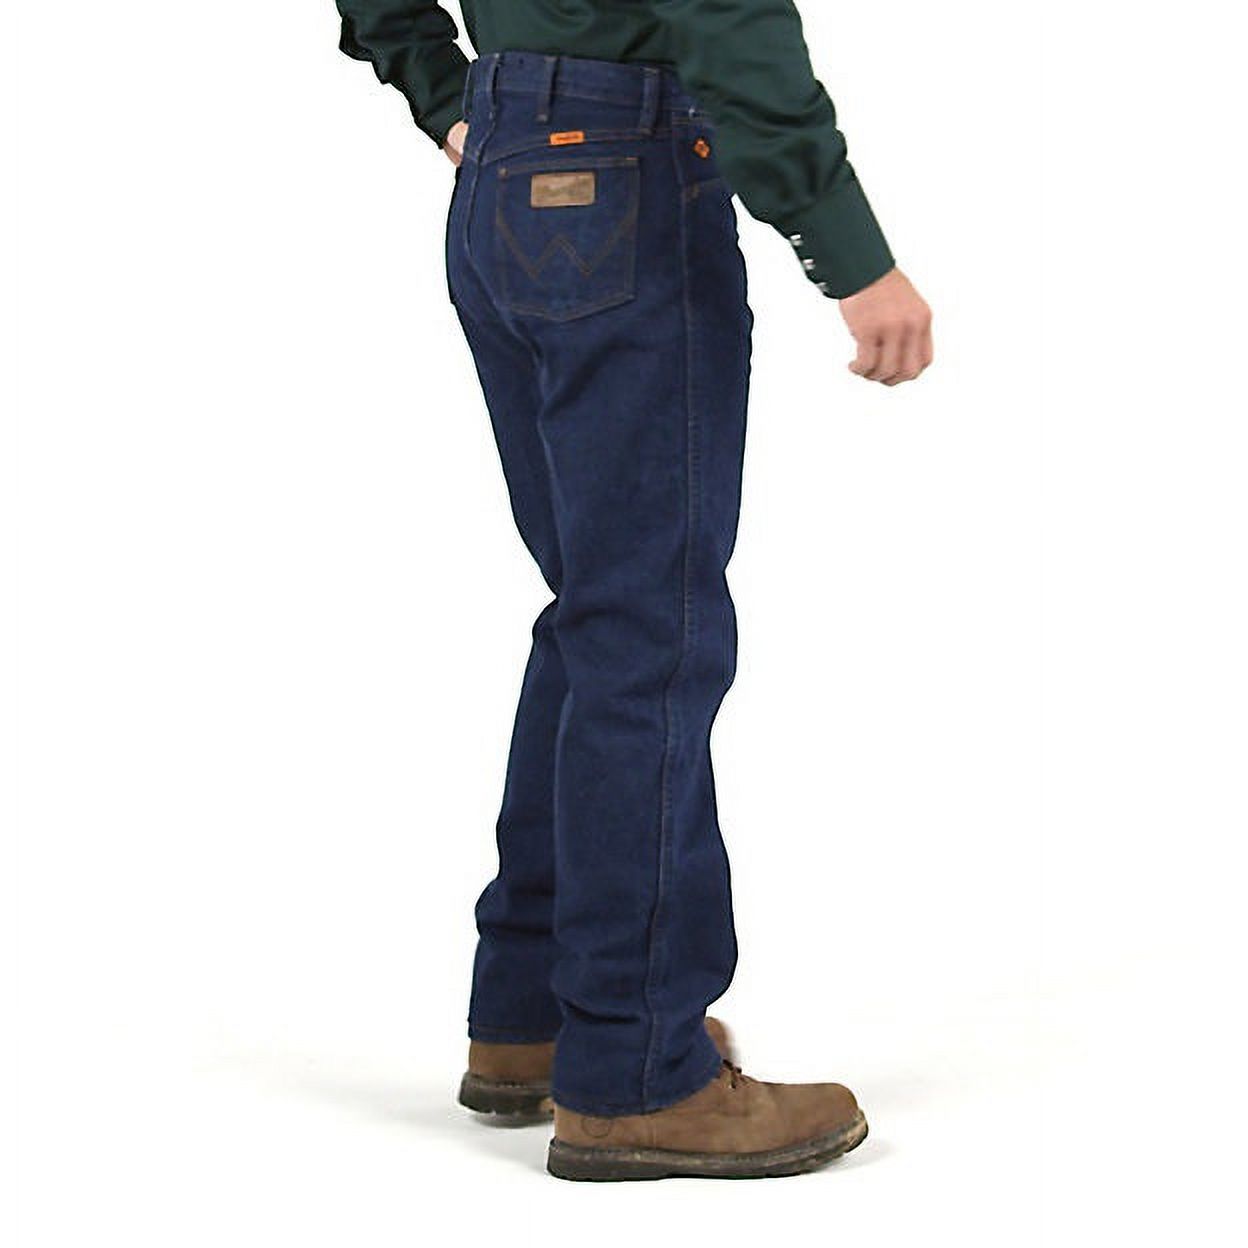 Men's Wrangler Workwear Flame Resistant Original Fit Jean - image 4 of 5